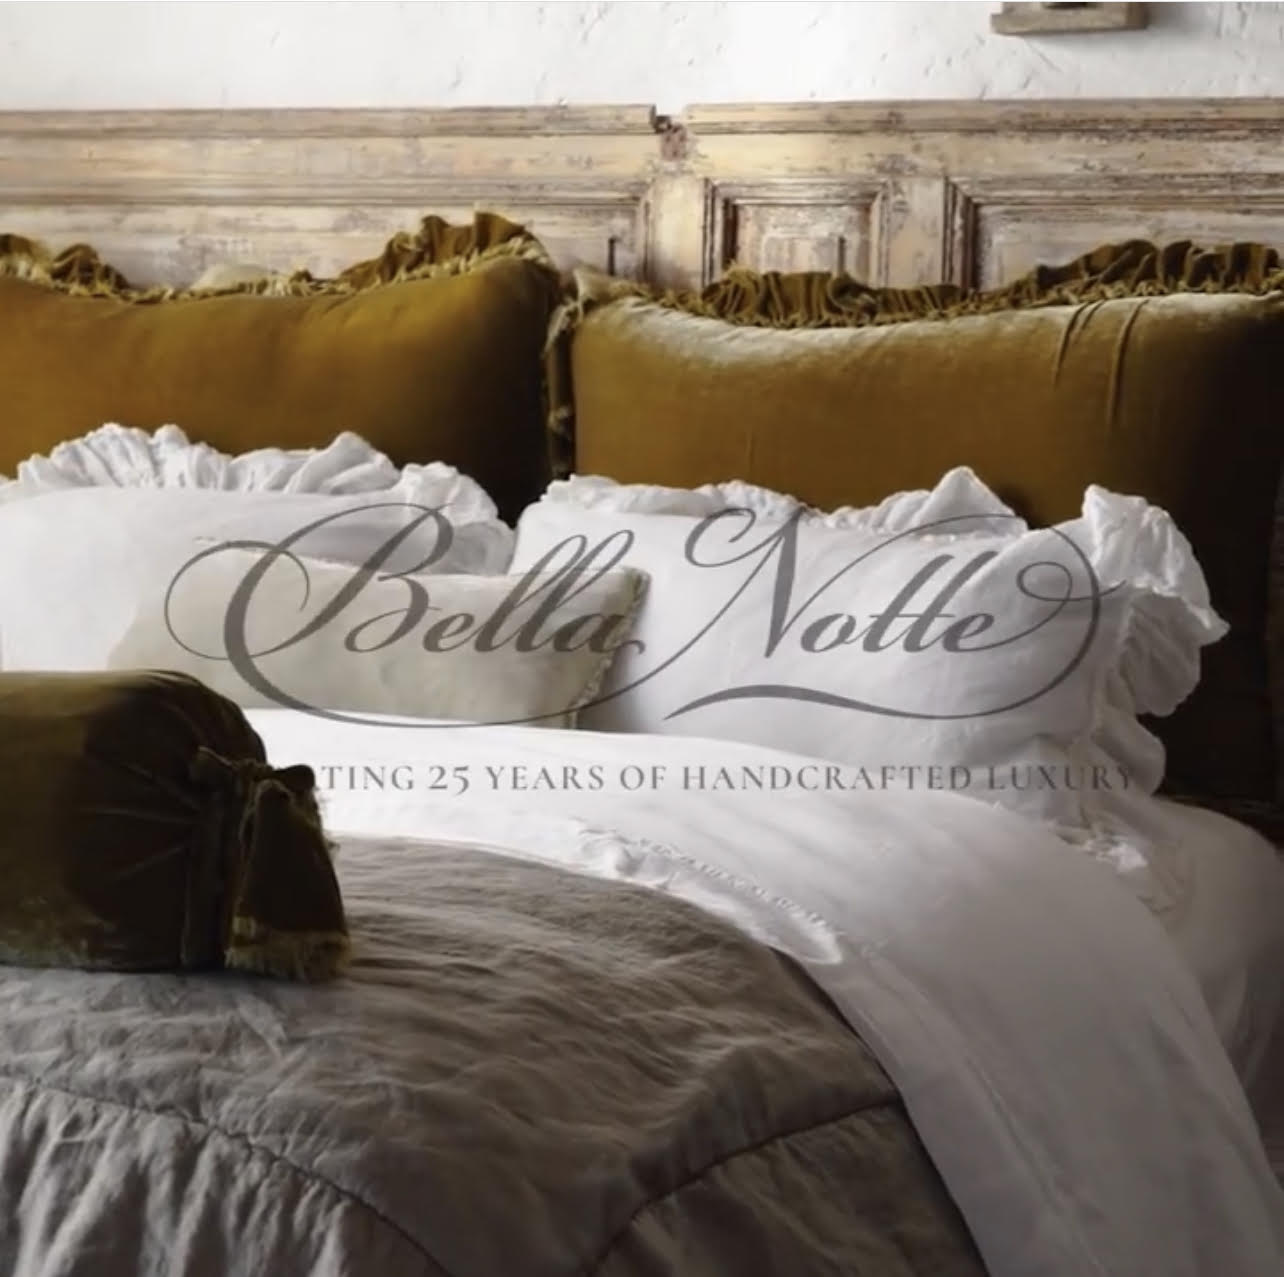 Bella Notte Luxury Linens Available at La Farre Markt in Trussville, Alabama